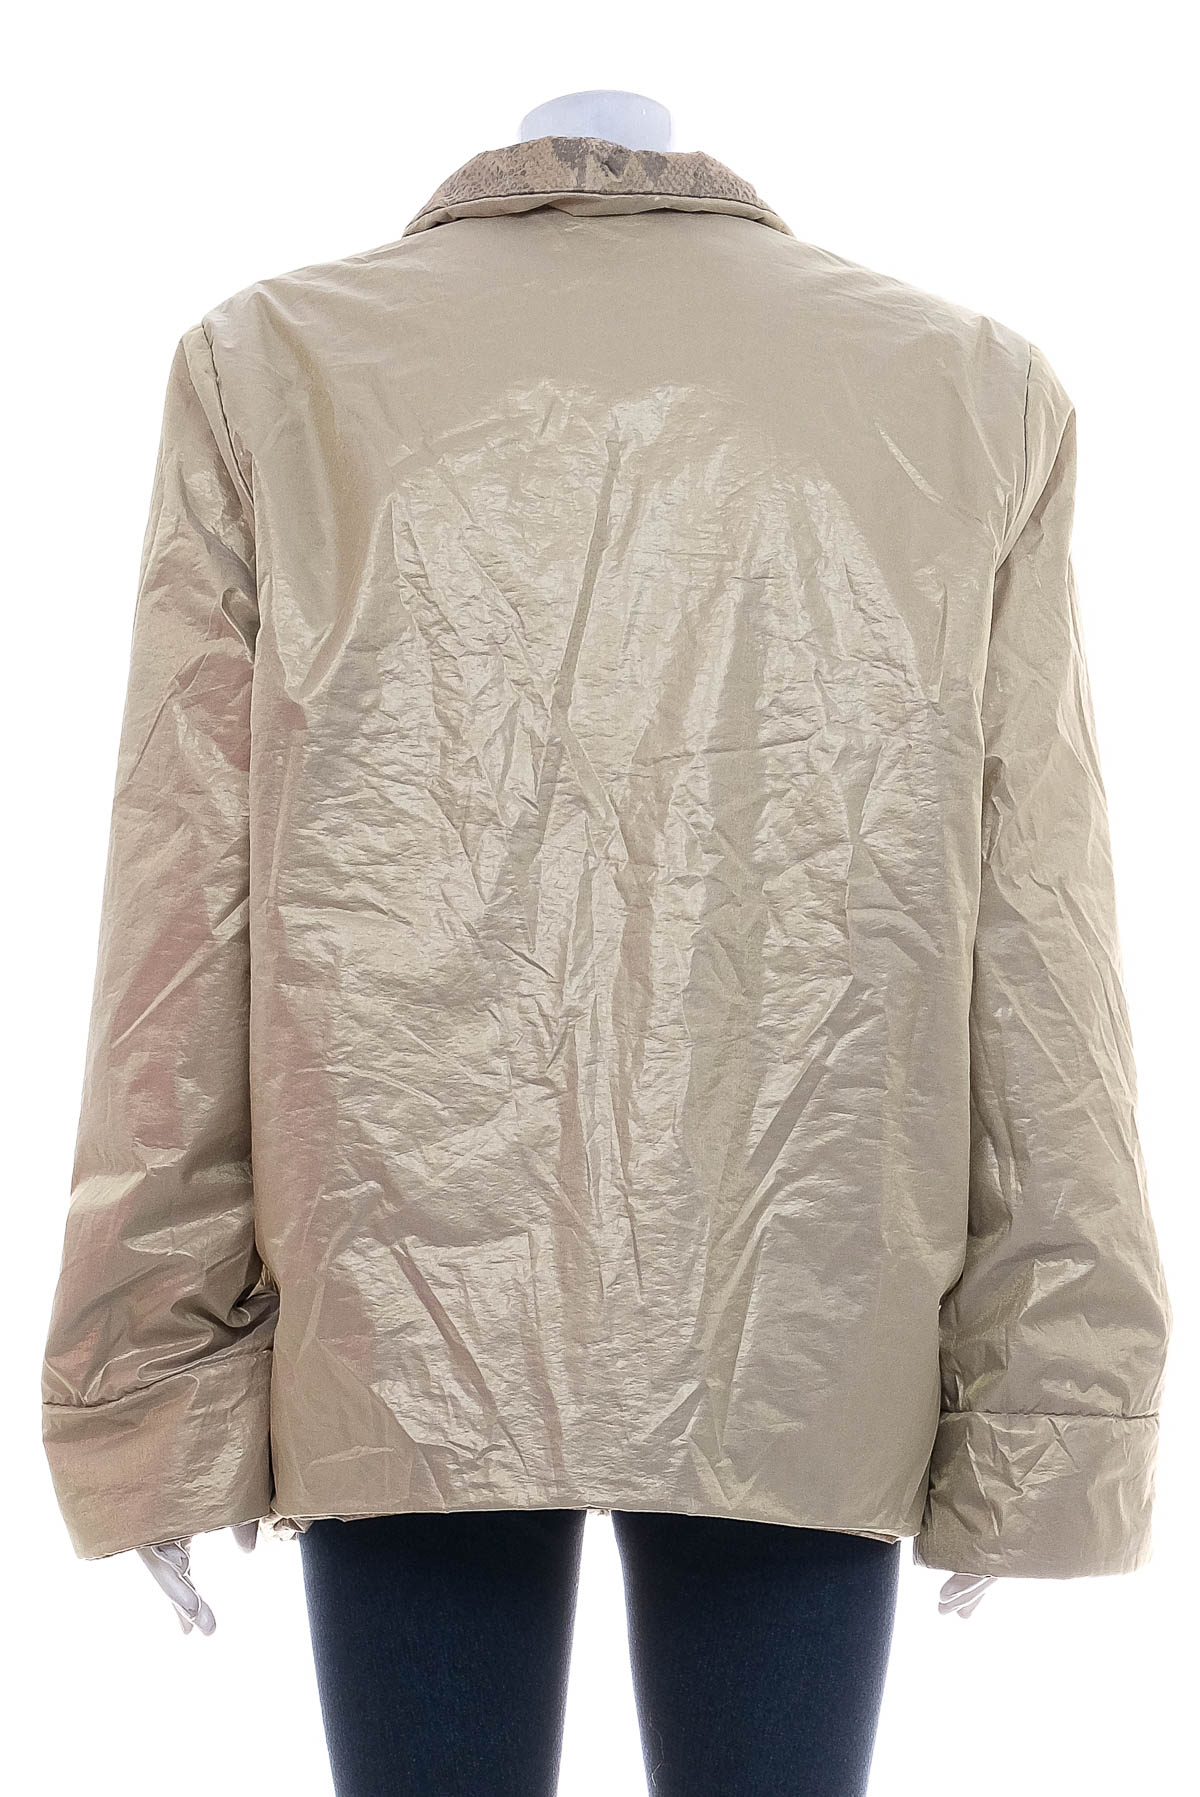 Female jacket - Gil Bret - 2